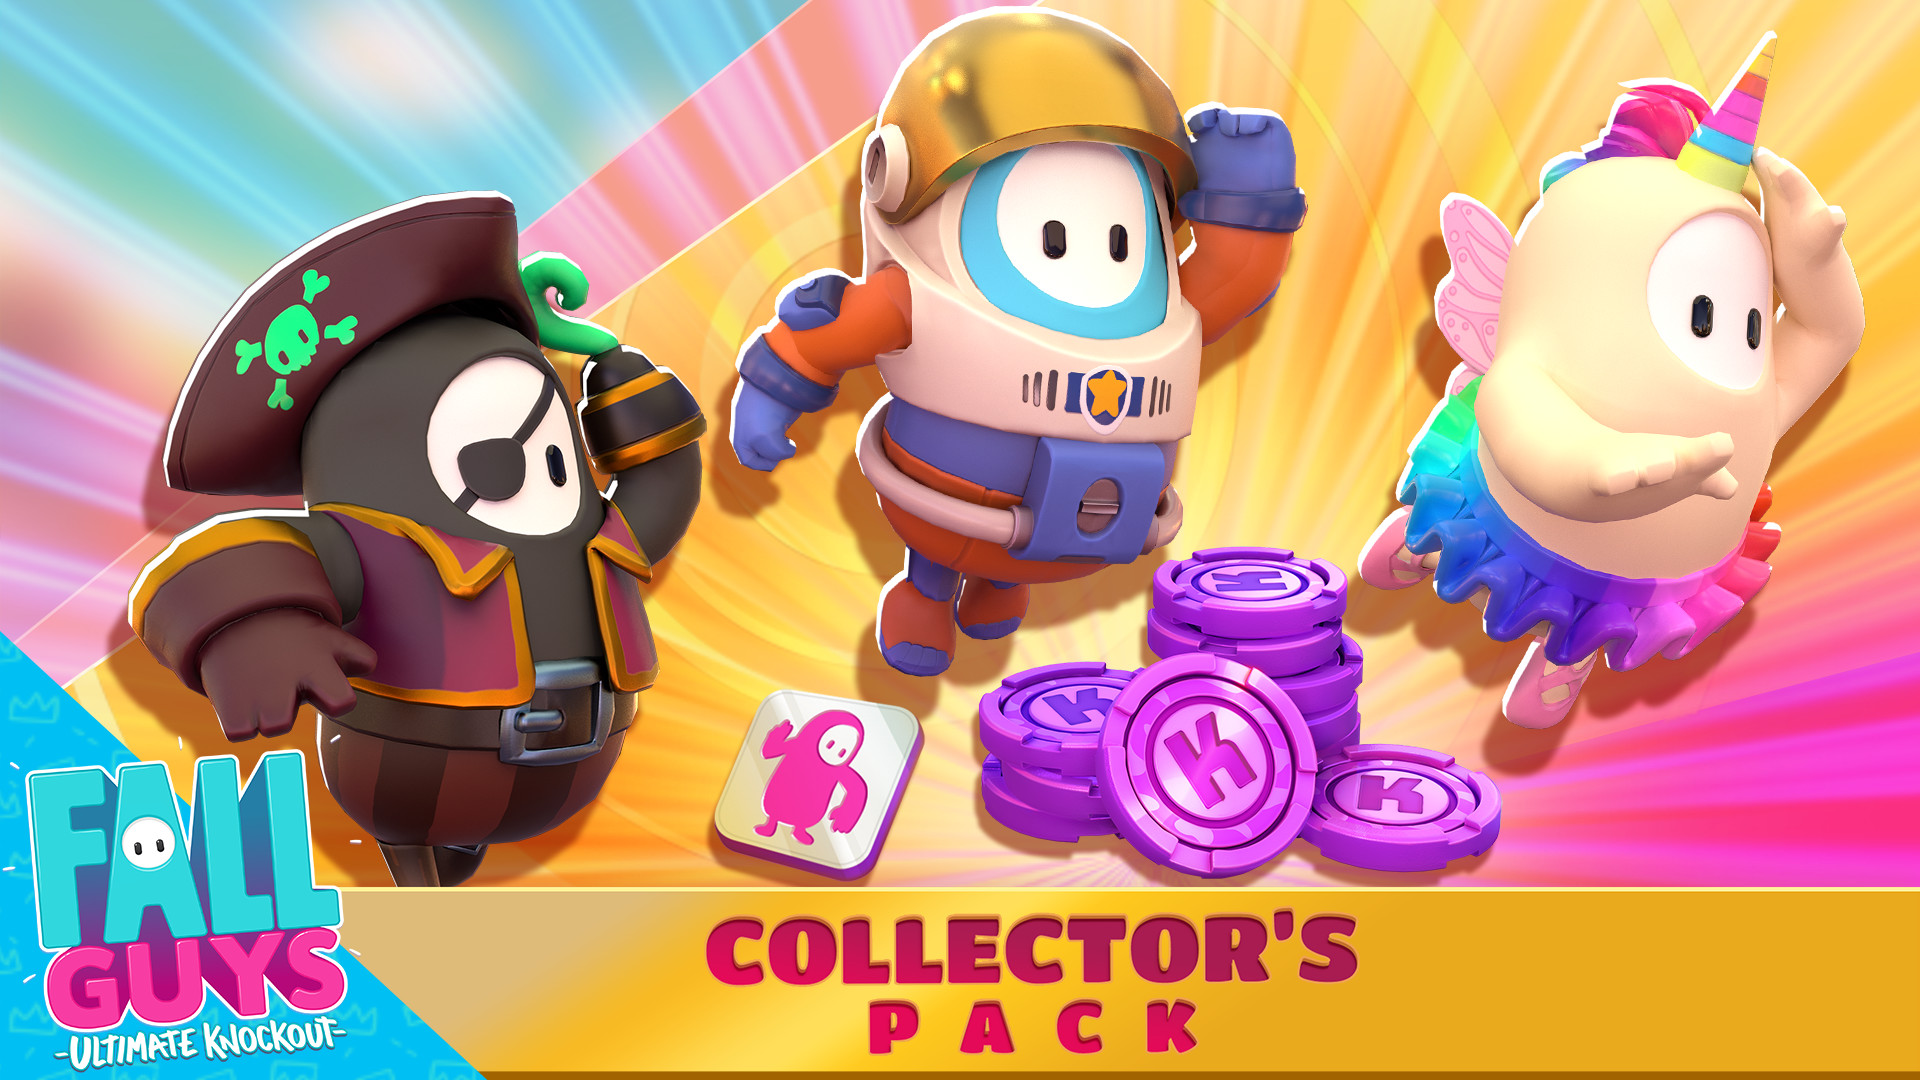 KHAiHOM.com - Fall Guys: Collectors Pack